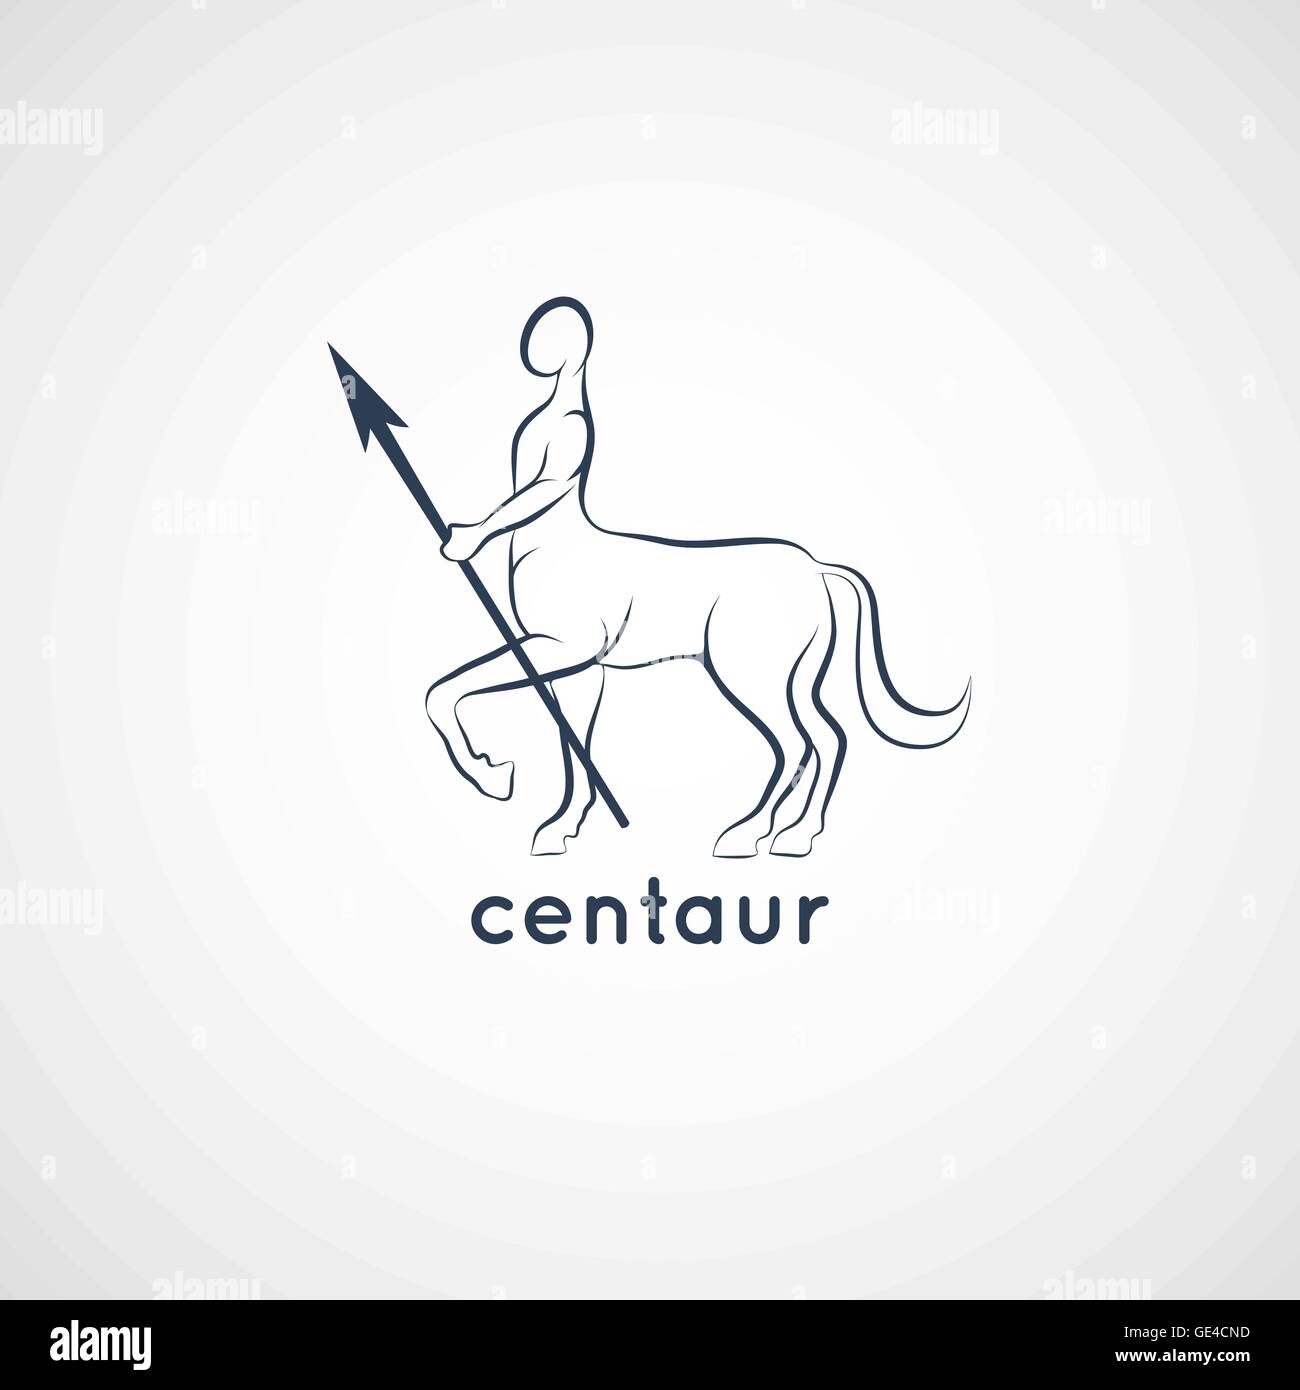 centaur logo vector Stock Vector